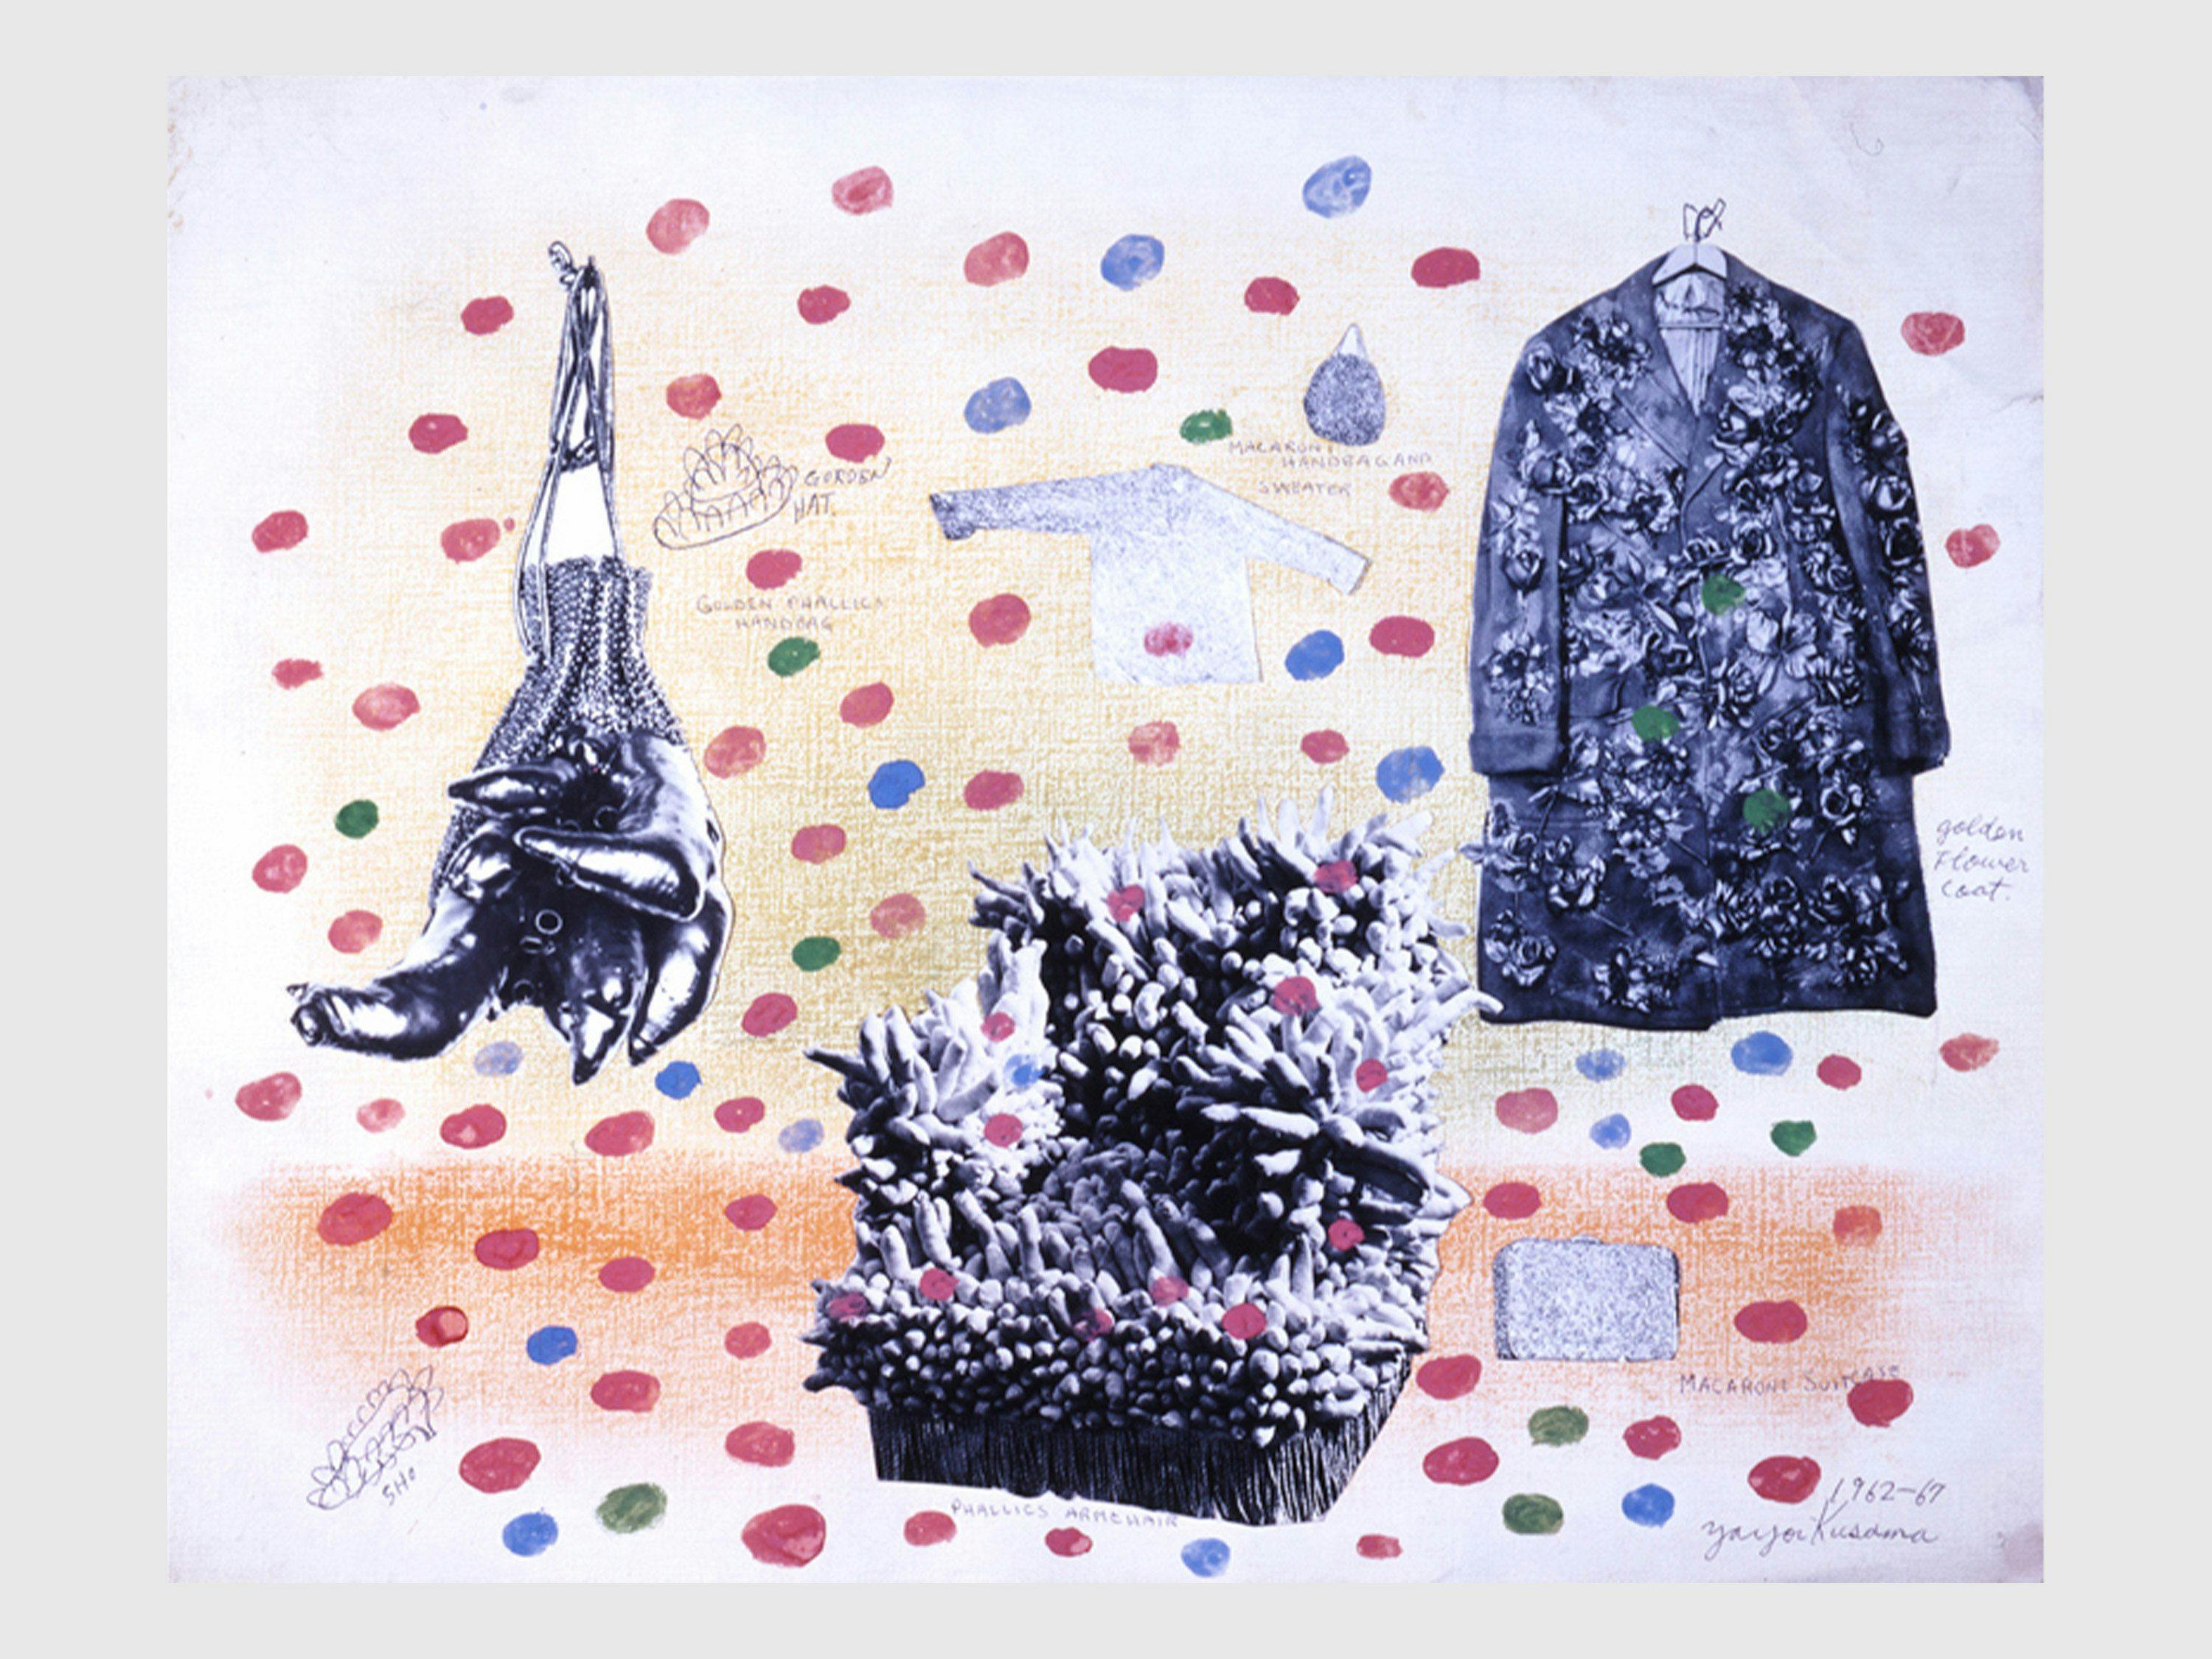 A mixed media artwork by Yayoi Kusama, titled Self Obliteration No. 1, 1962 to 1967.